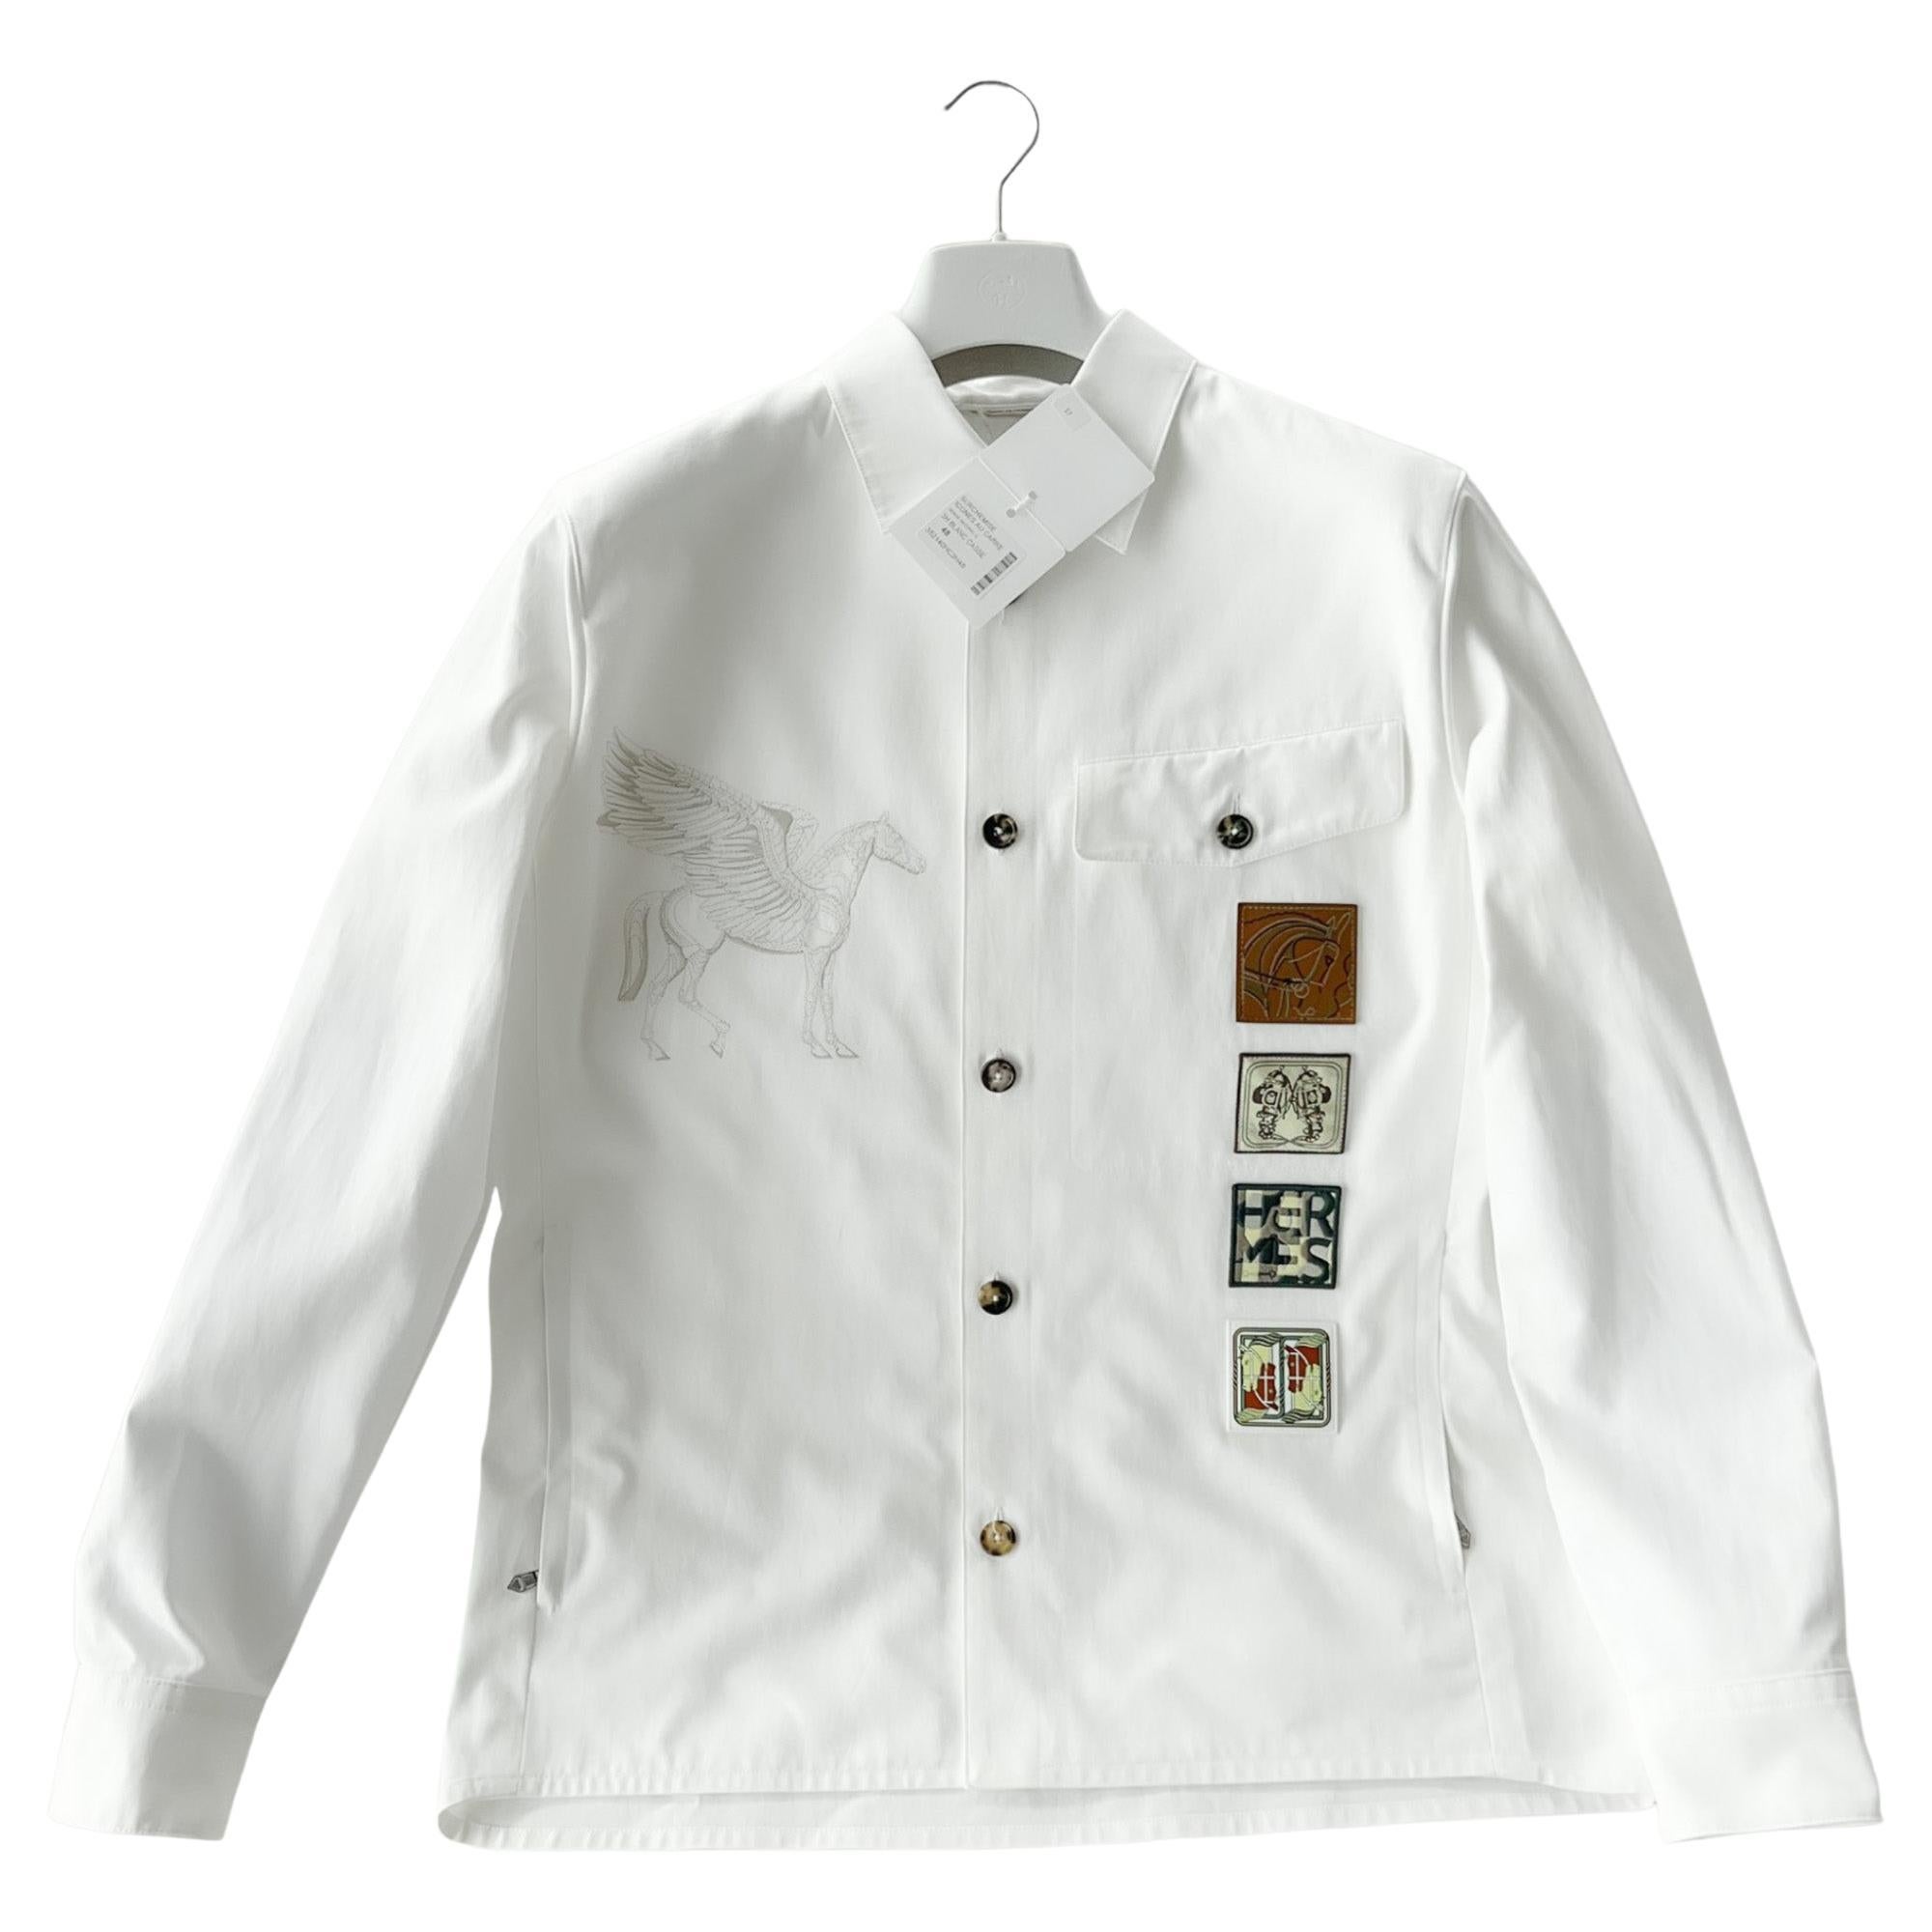 Hermès Men's 'Icones au Carre' Overshirt, White, 48 EU, Medium UK For Sale